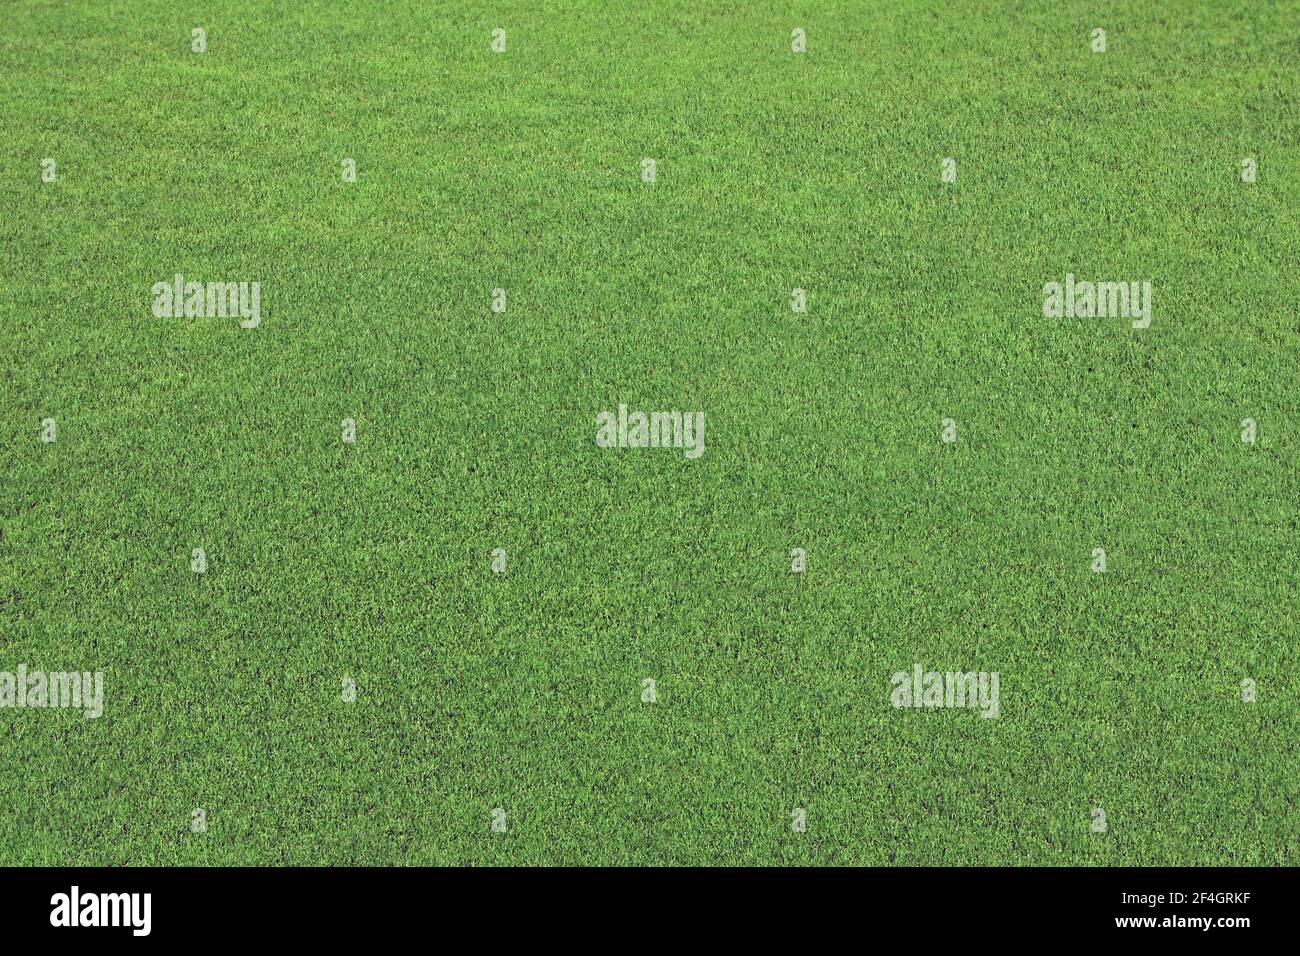 Sfondo verde erba, full frame fresco prato modello in estate Foto Stock